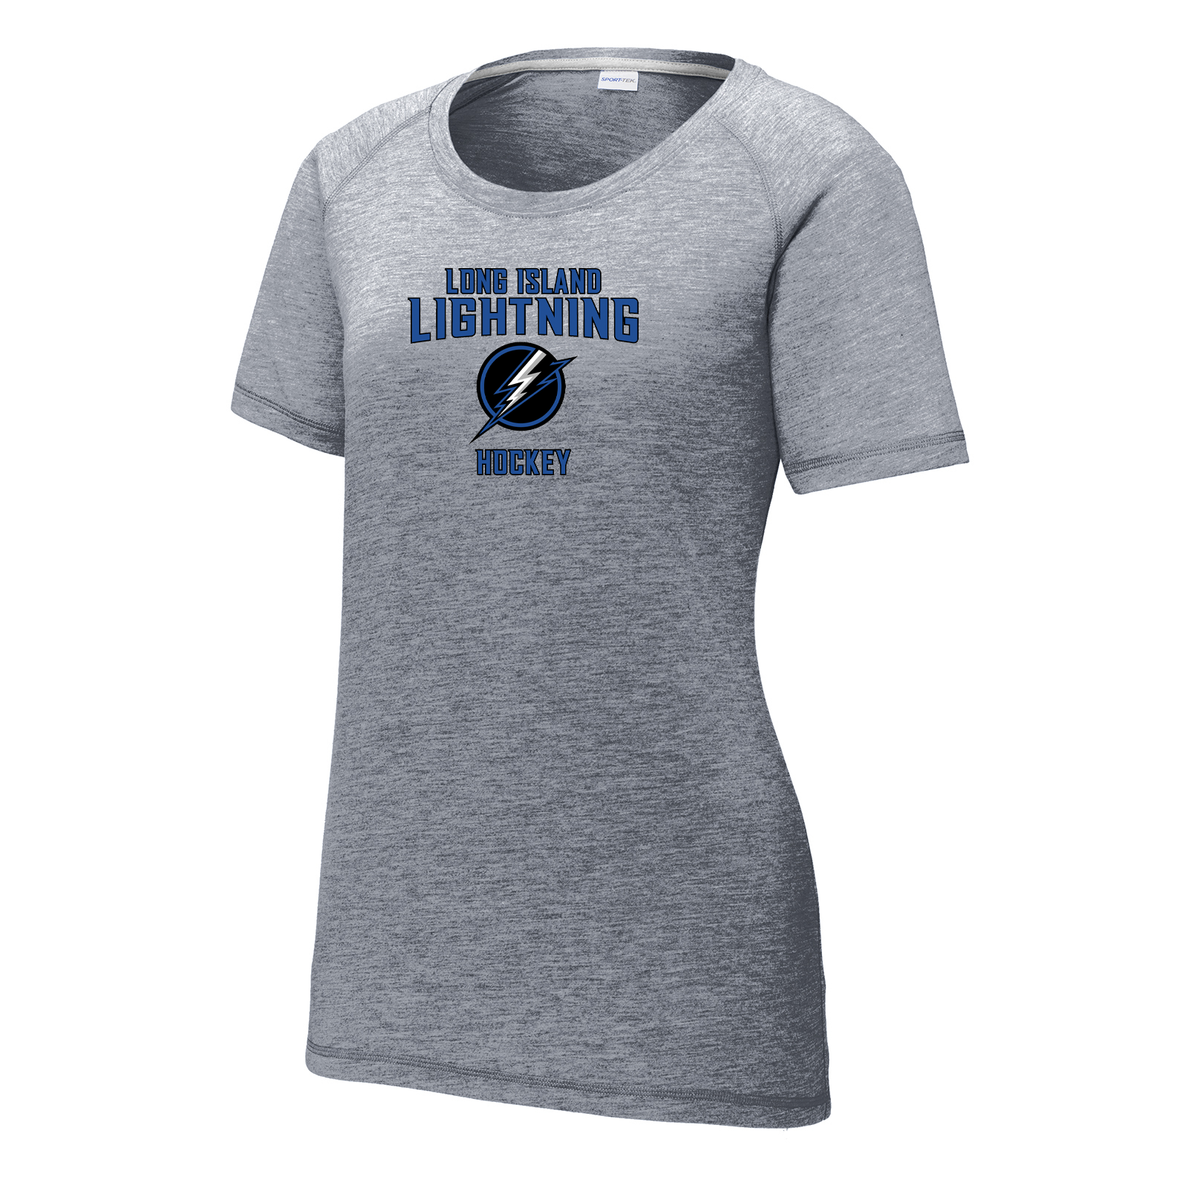 Long Island Lightning Hockey Women's Raglan CottonTouch